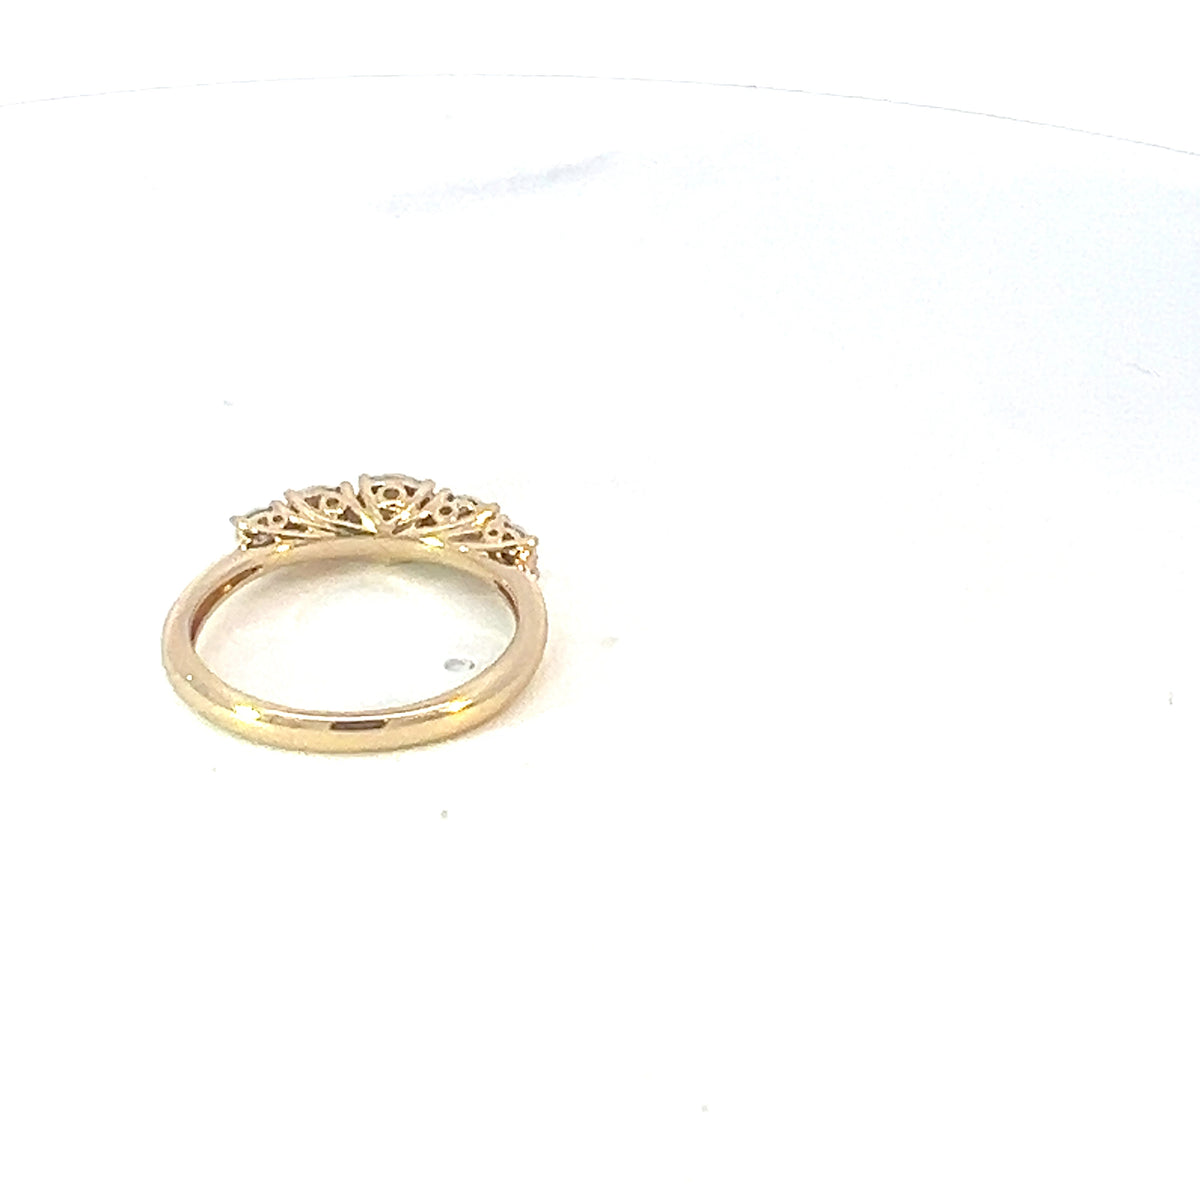 14K Yellow Gold Diamond Ring - size 6.5